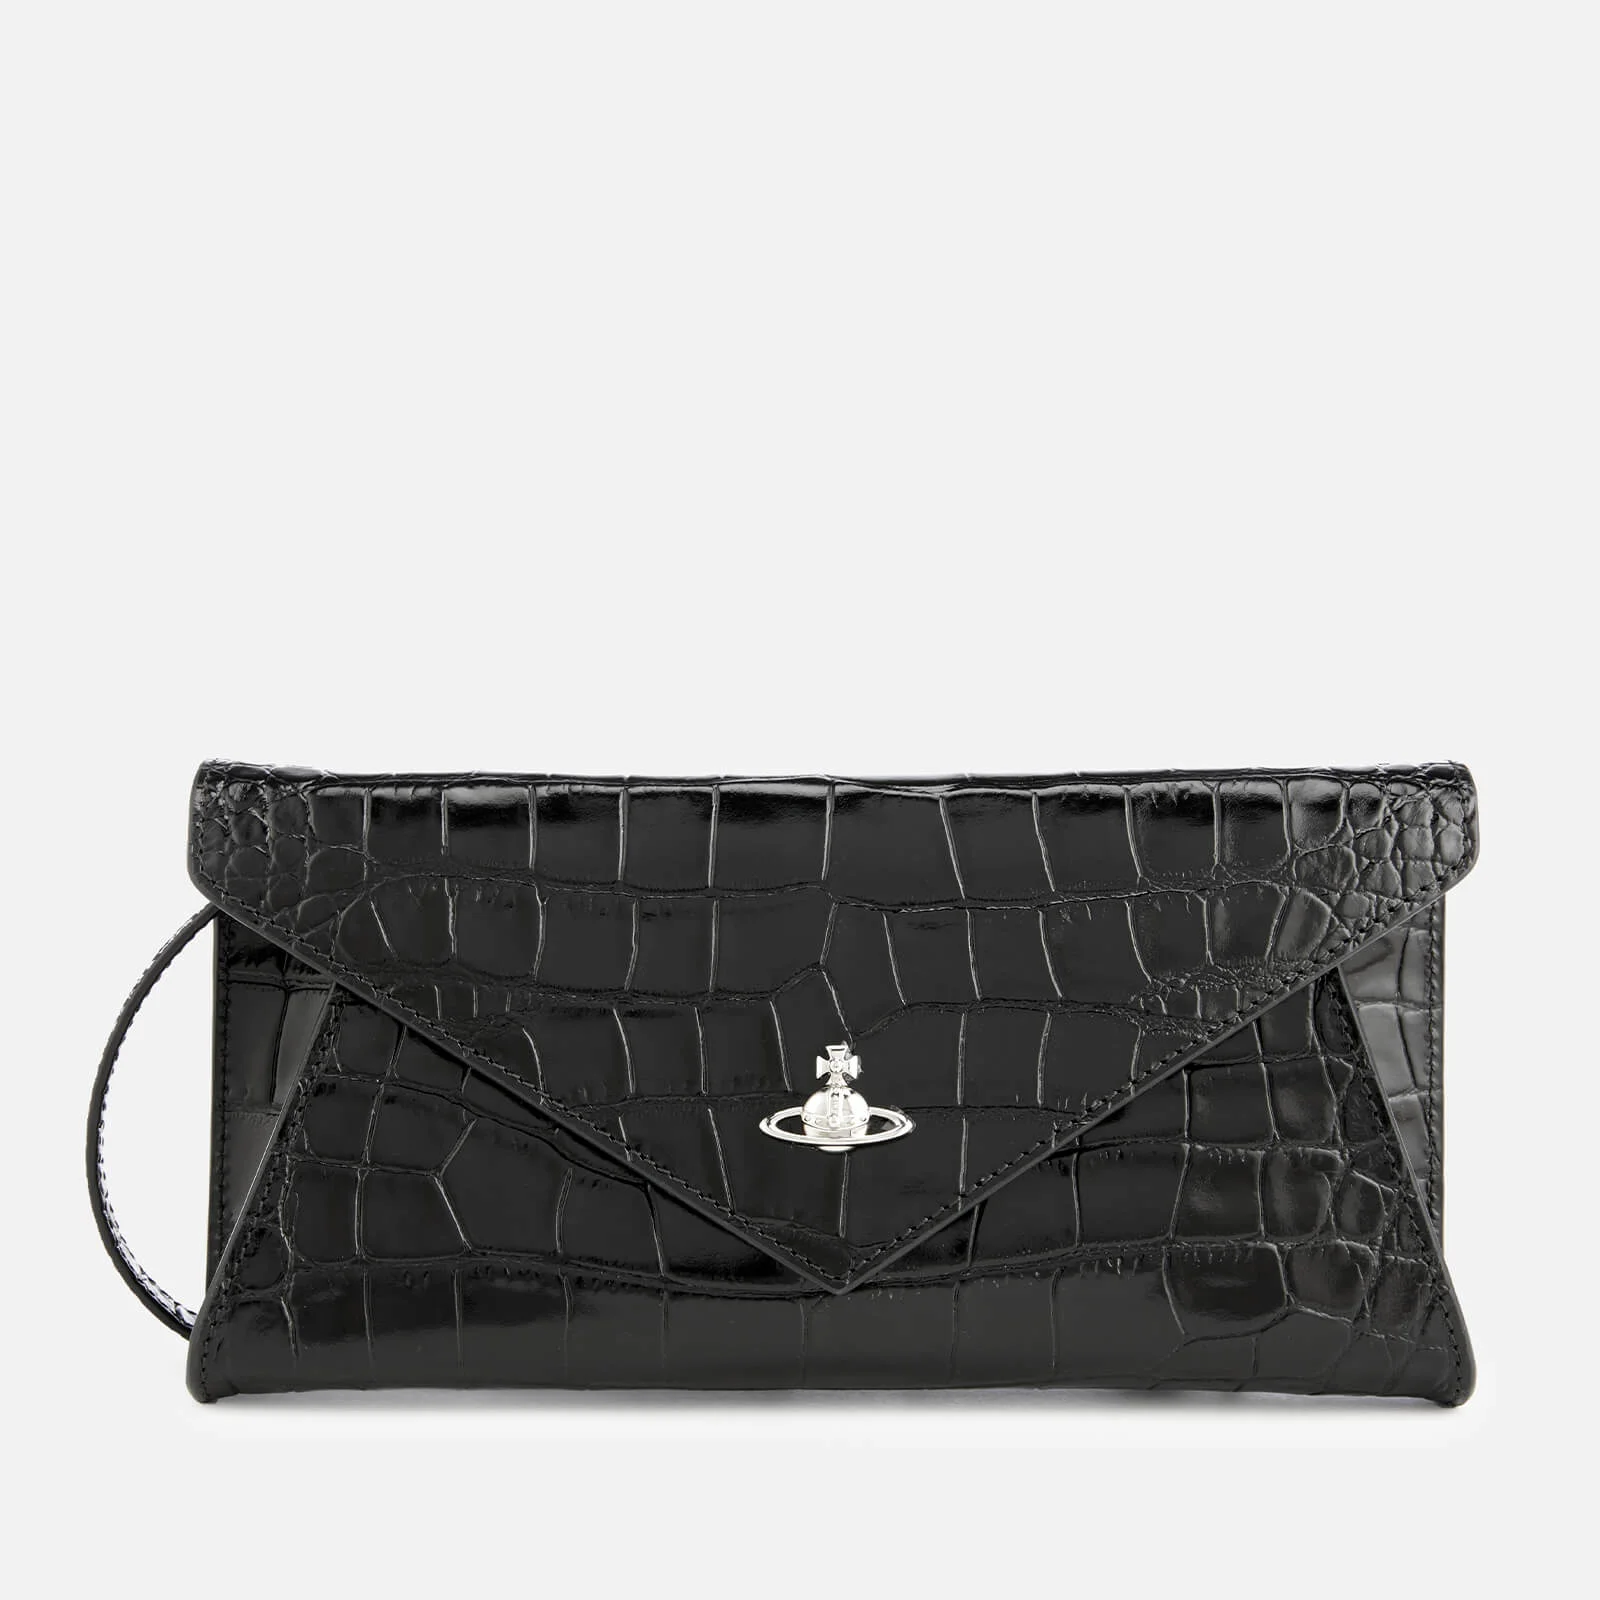 Vivienne Westwood Women's Lisa Envelope Clutch Bag - Black Image 1